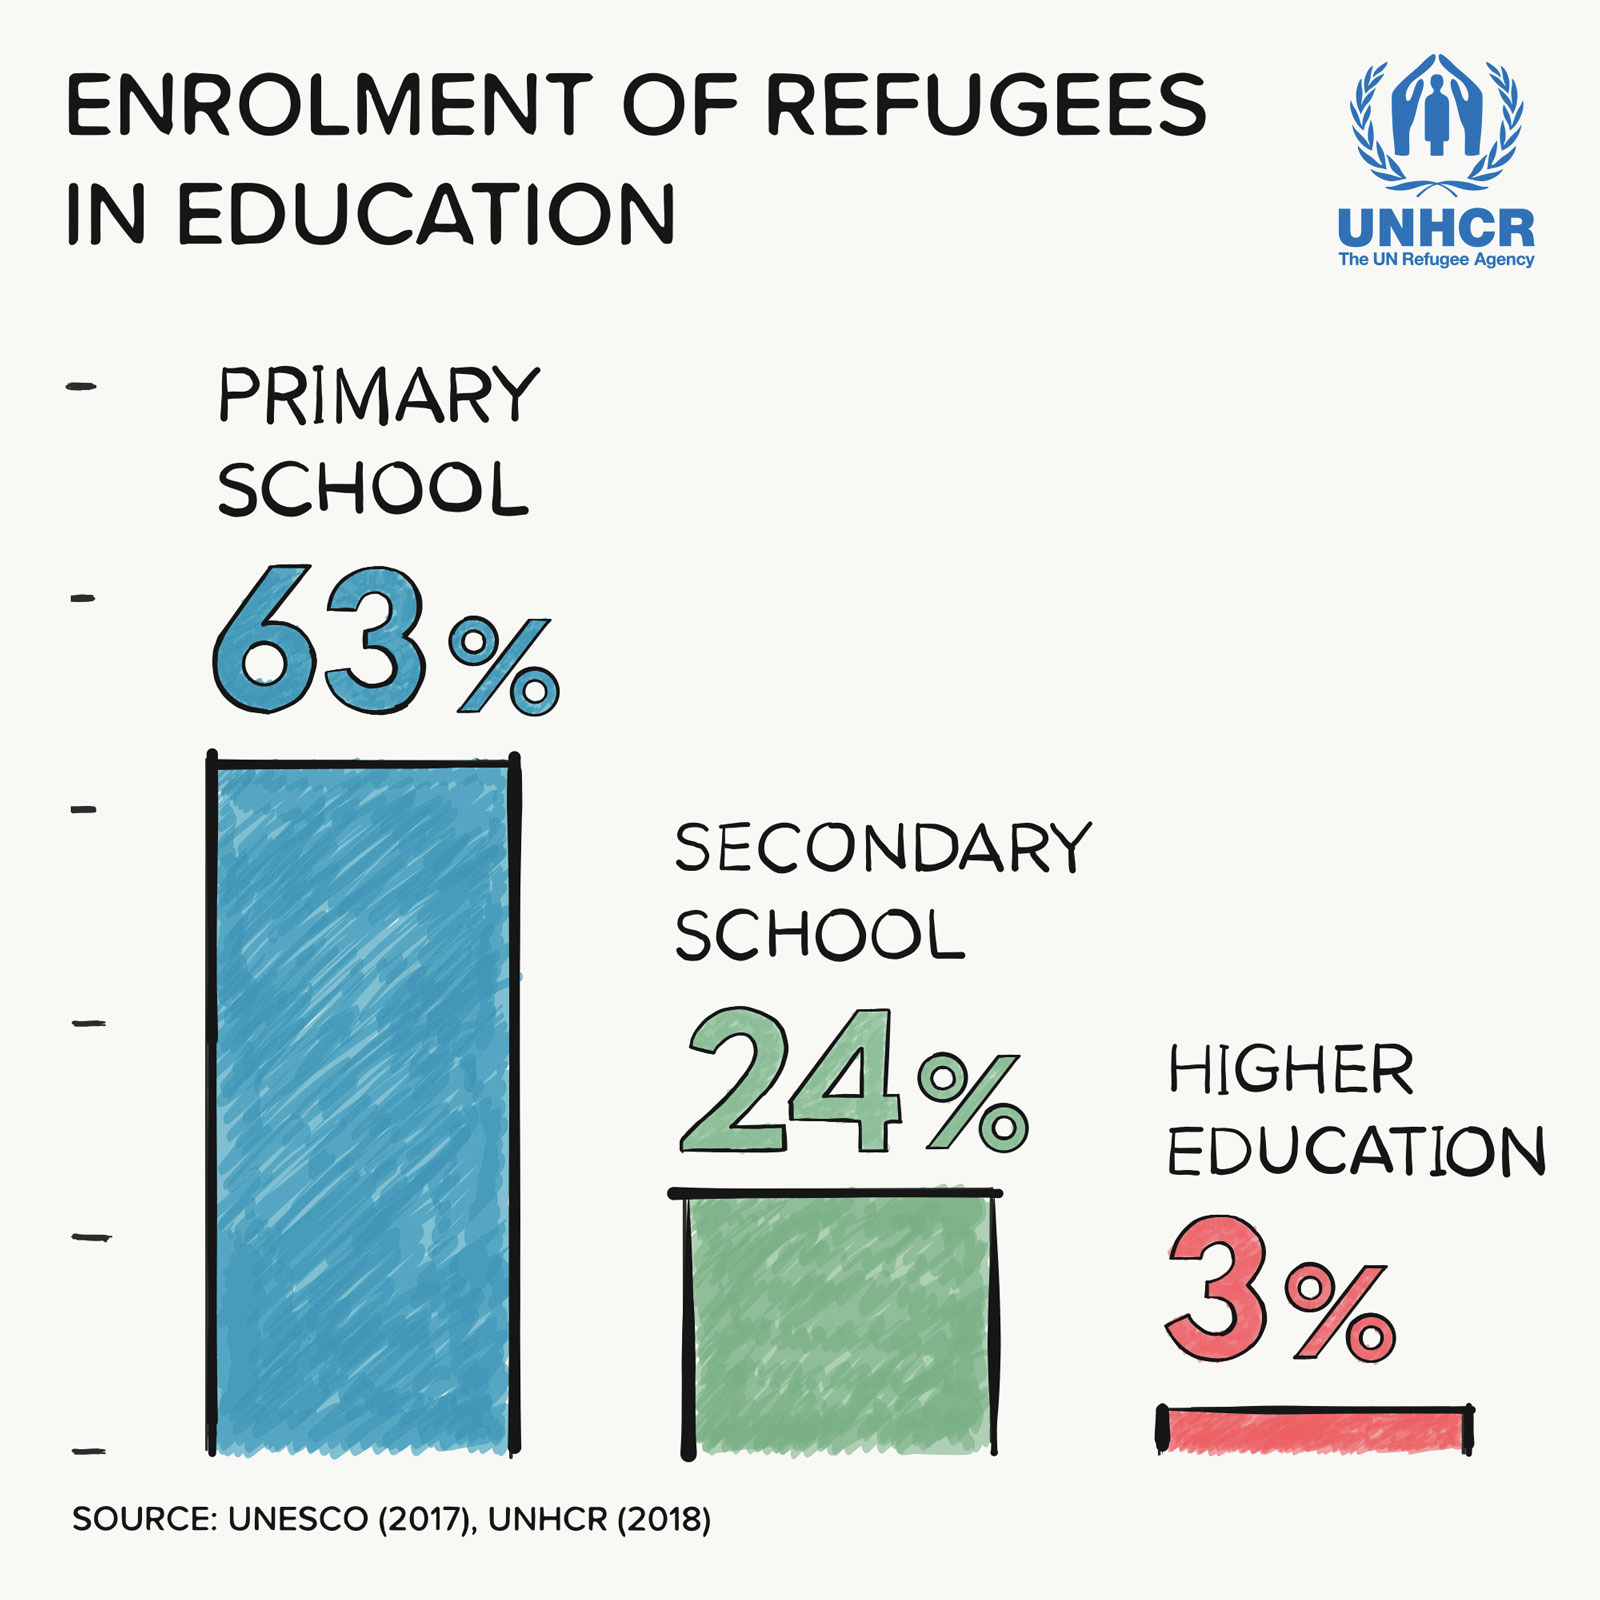 Enrollment of refugees in education